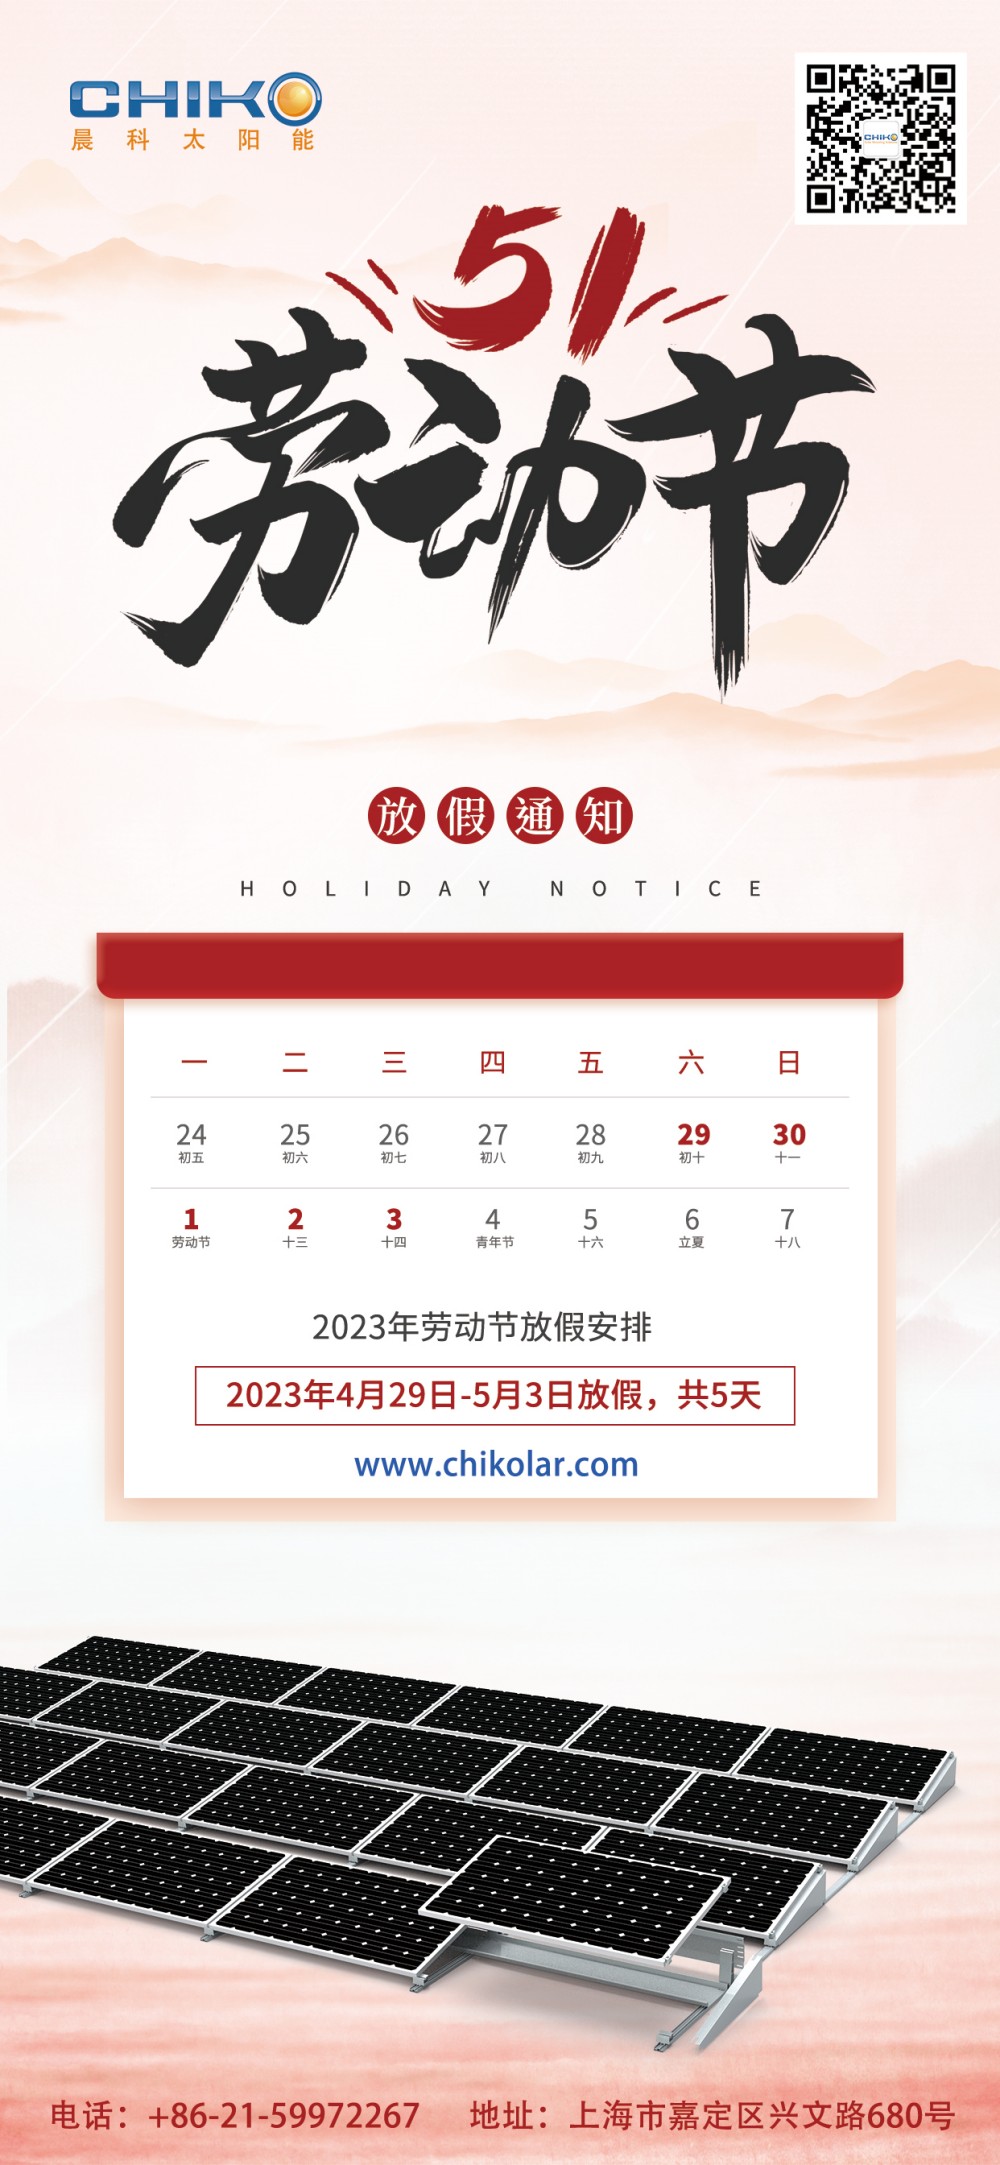 CHIKO Solar Holiday Notice